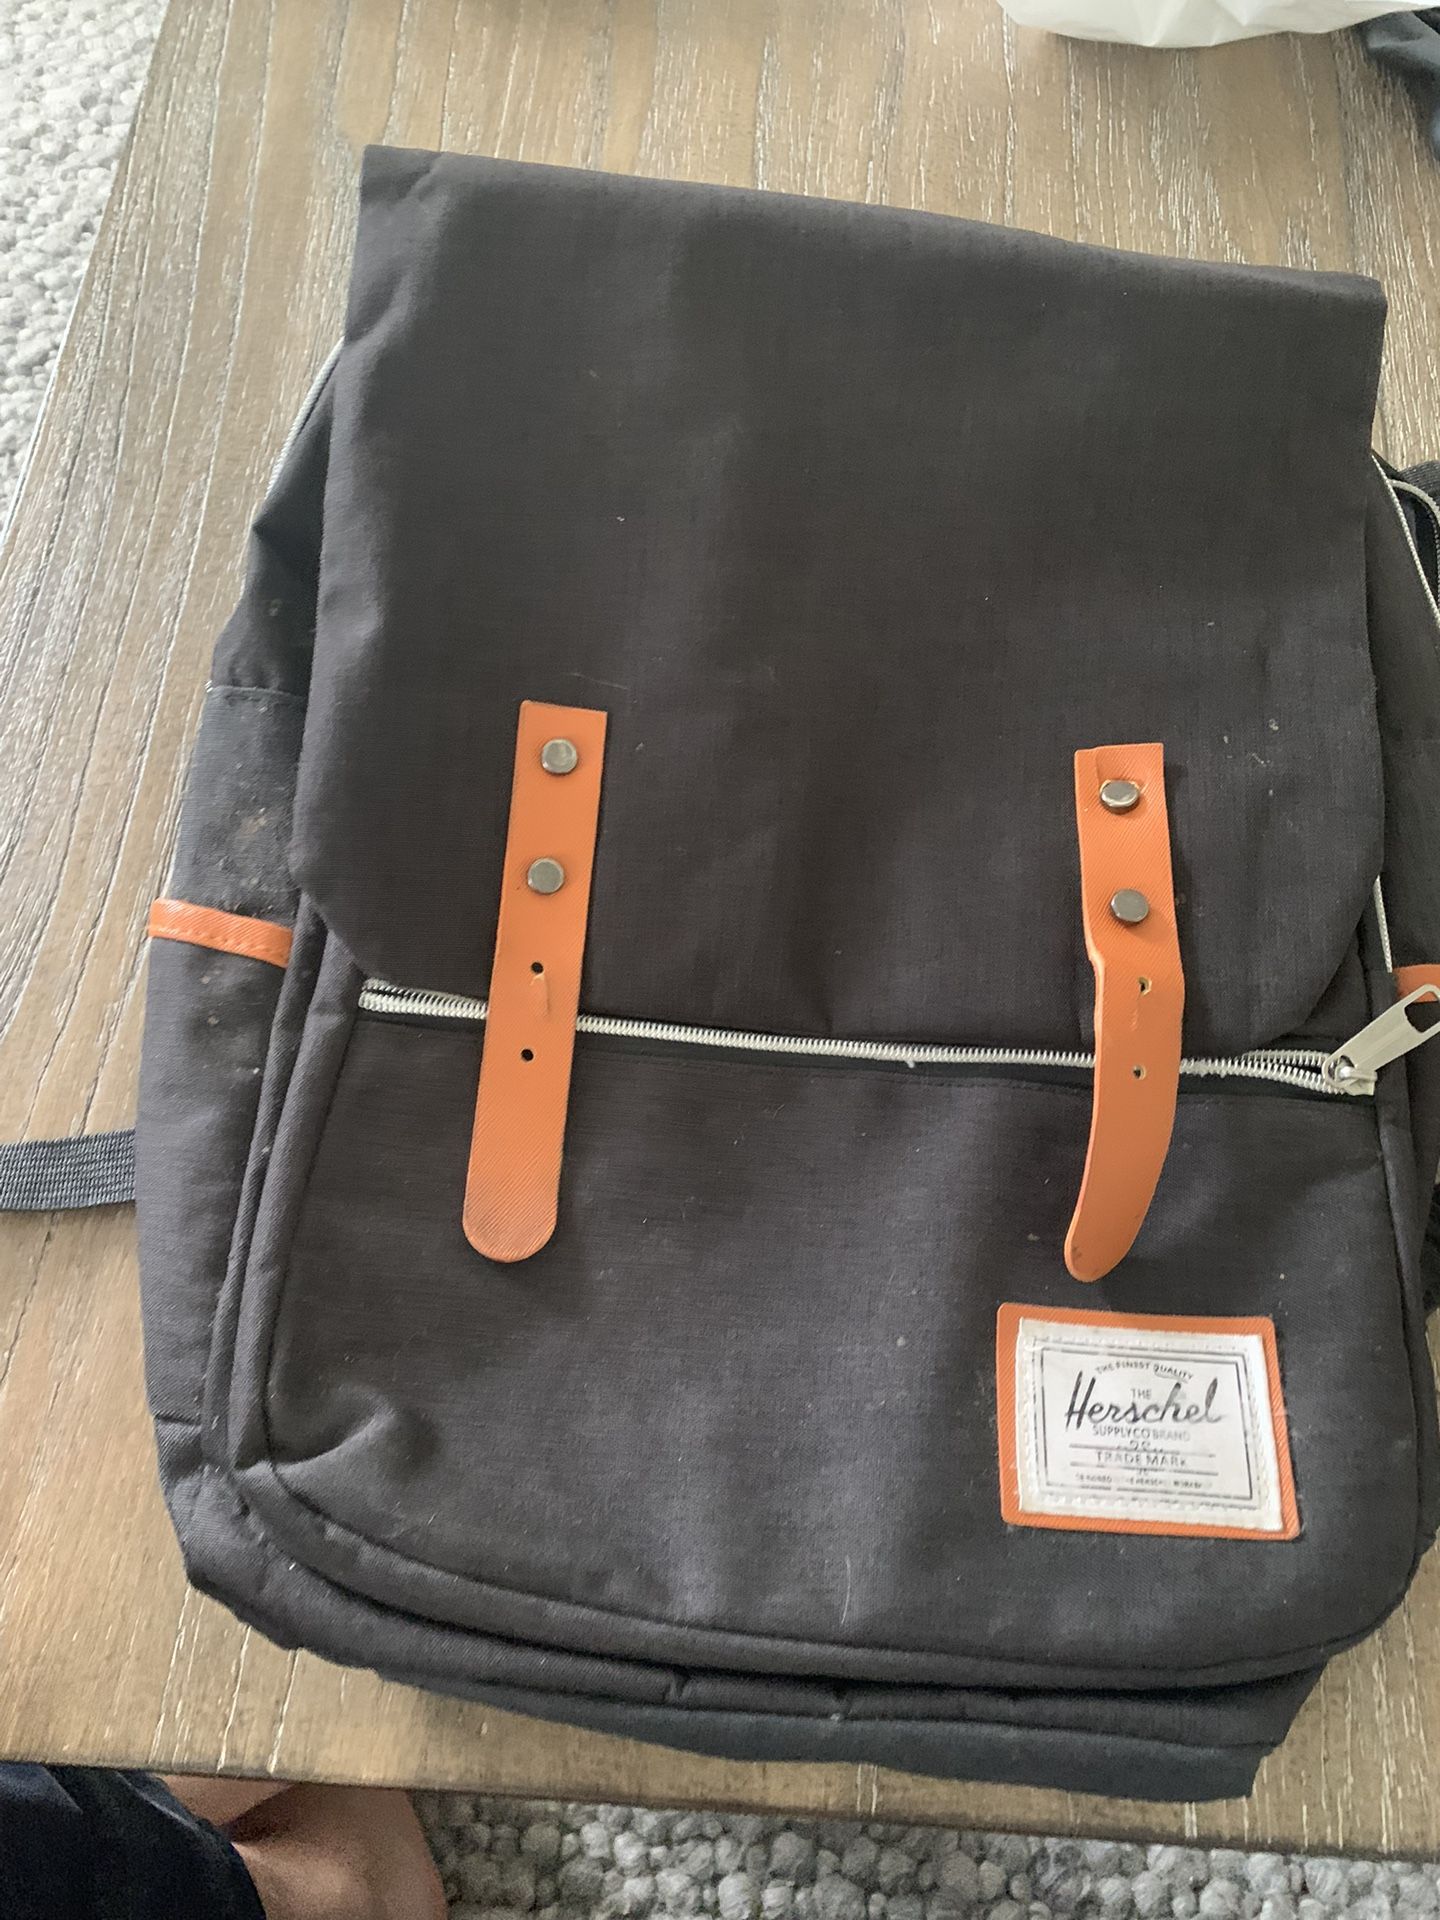 Hershel Backpack $20